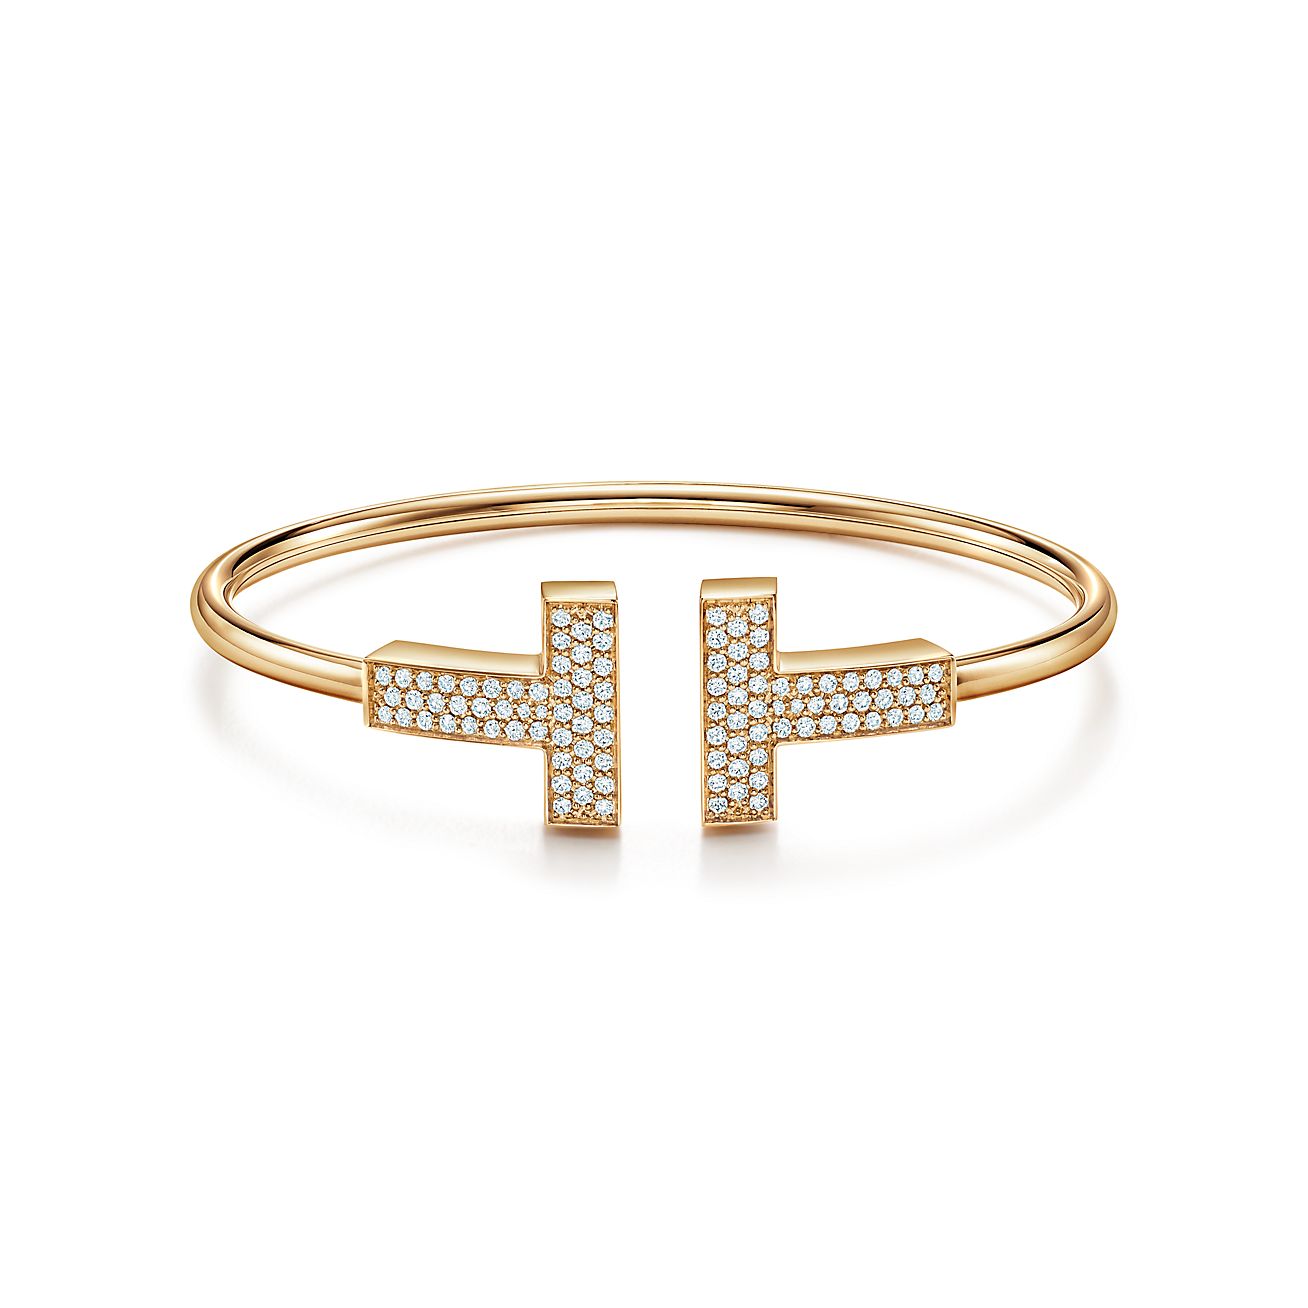 tiffany single diamond bracelet